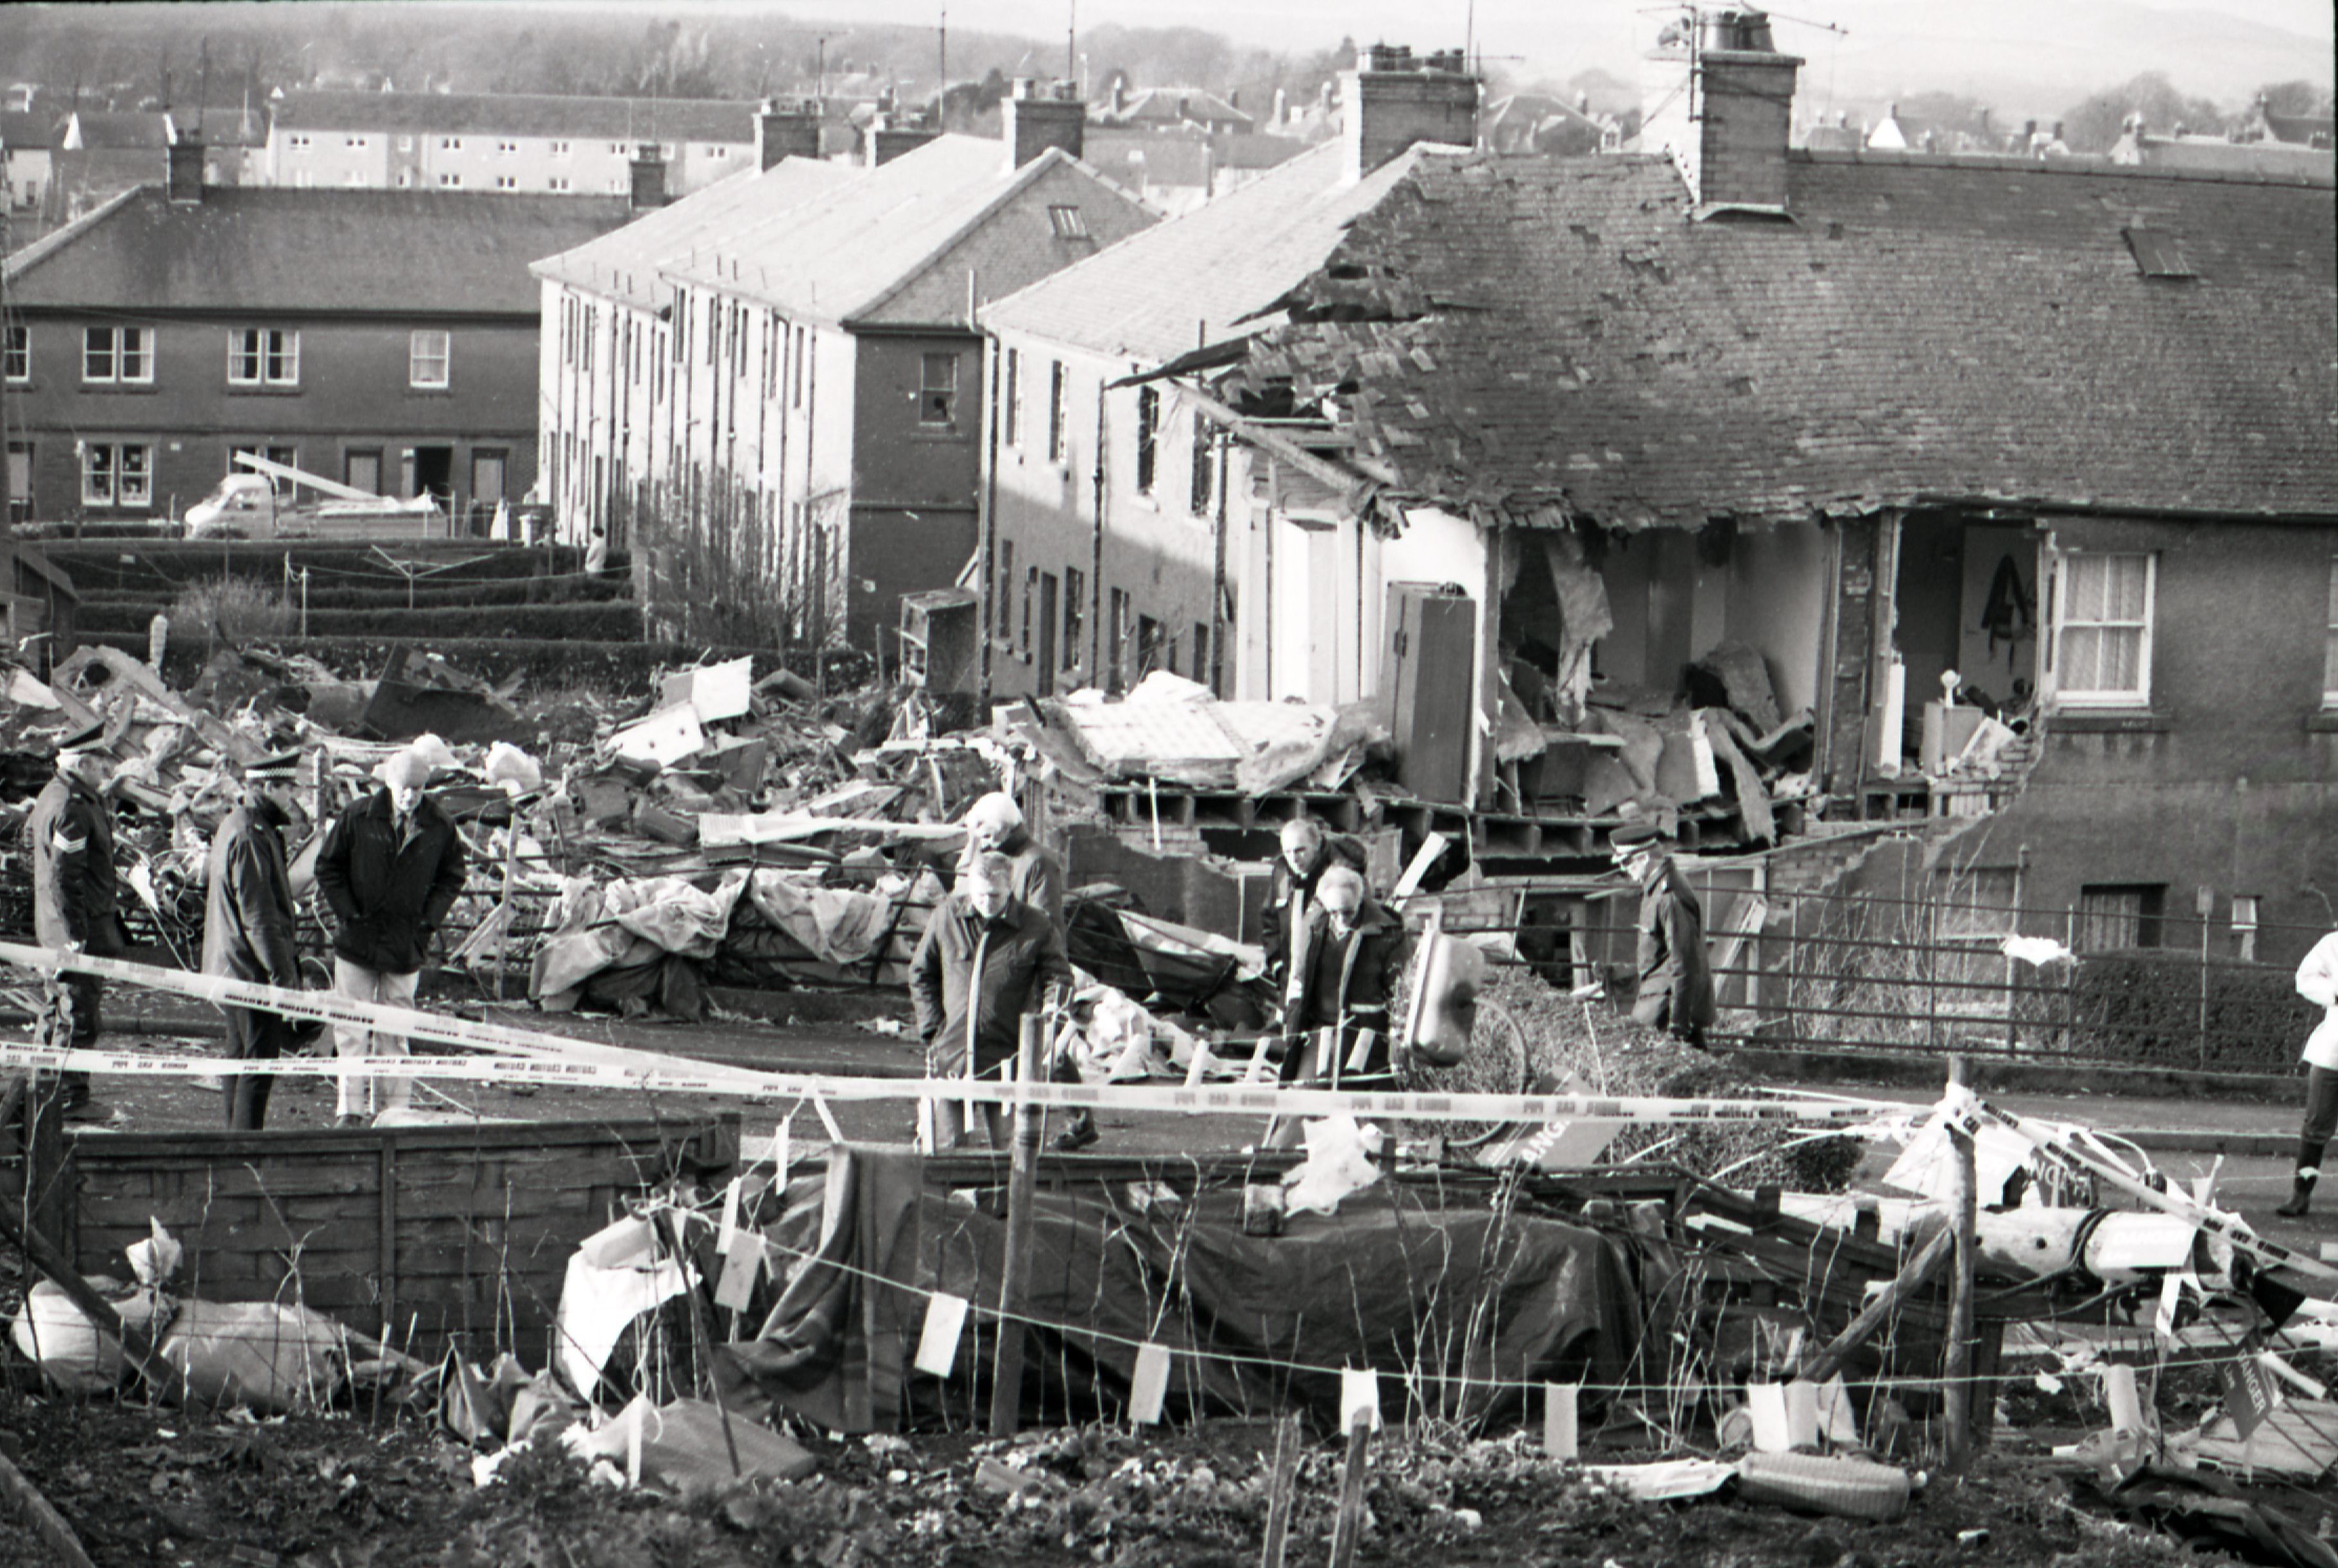 There were scenes of devastation at the crash site in Lockerbie.